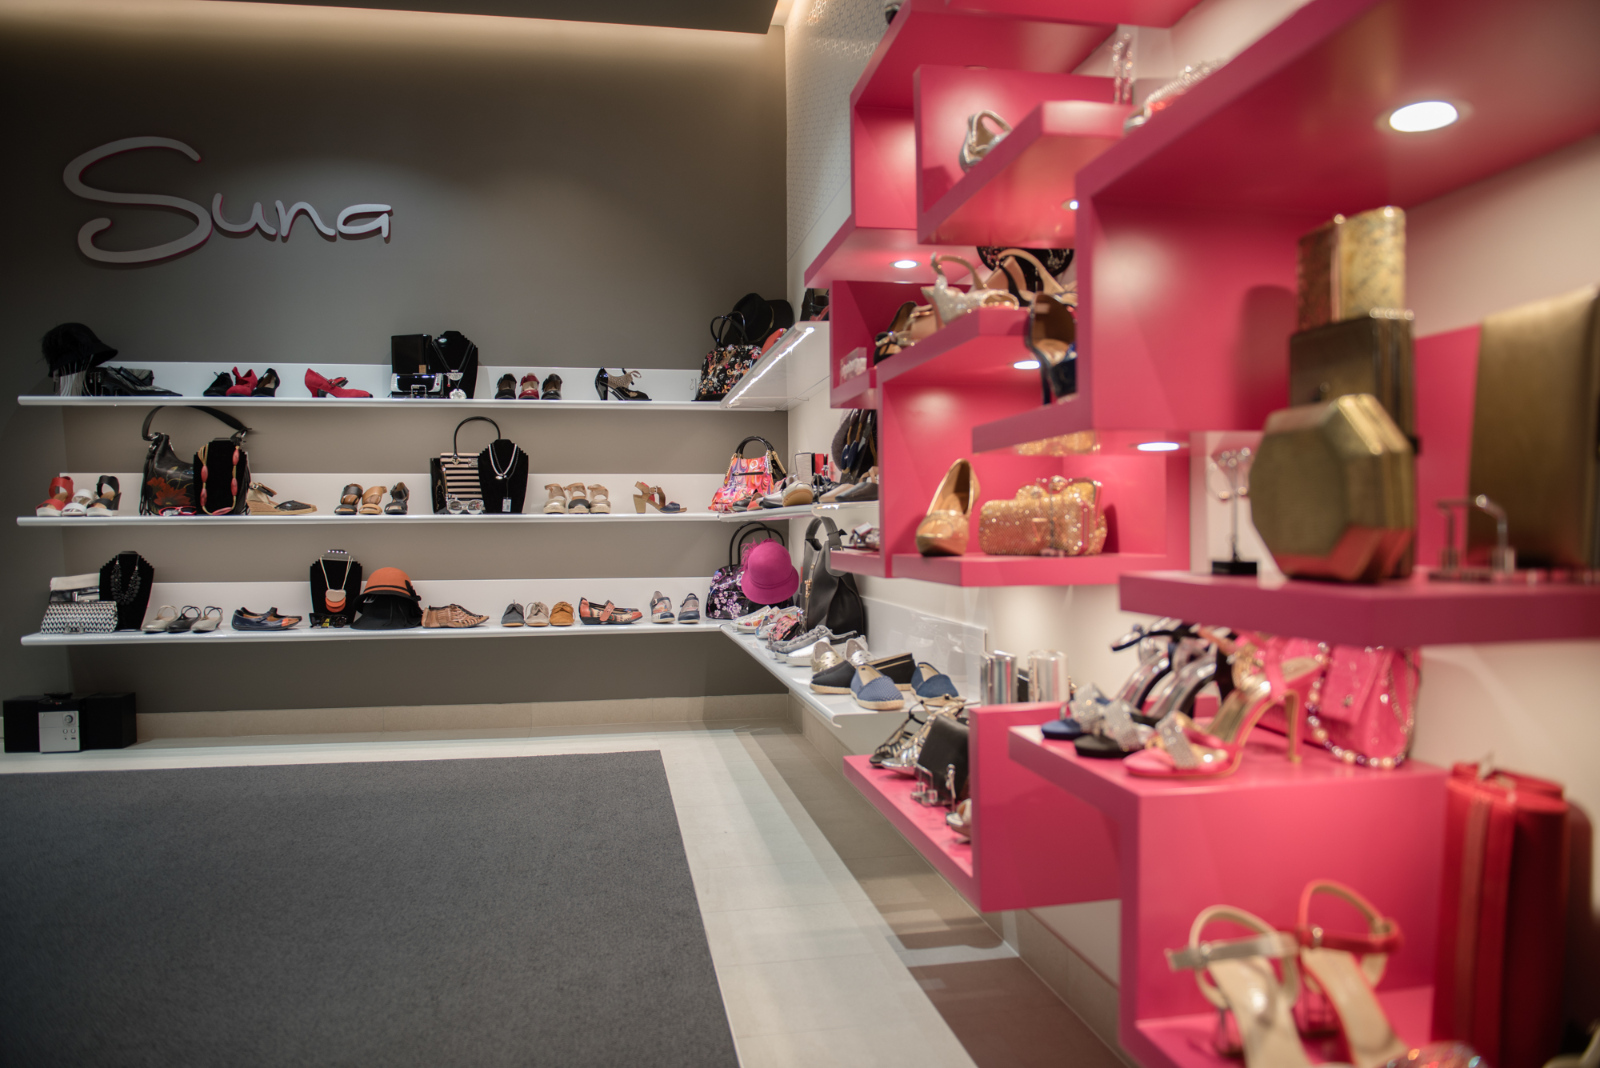 shoe stores kawana shopping world